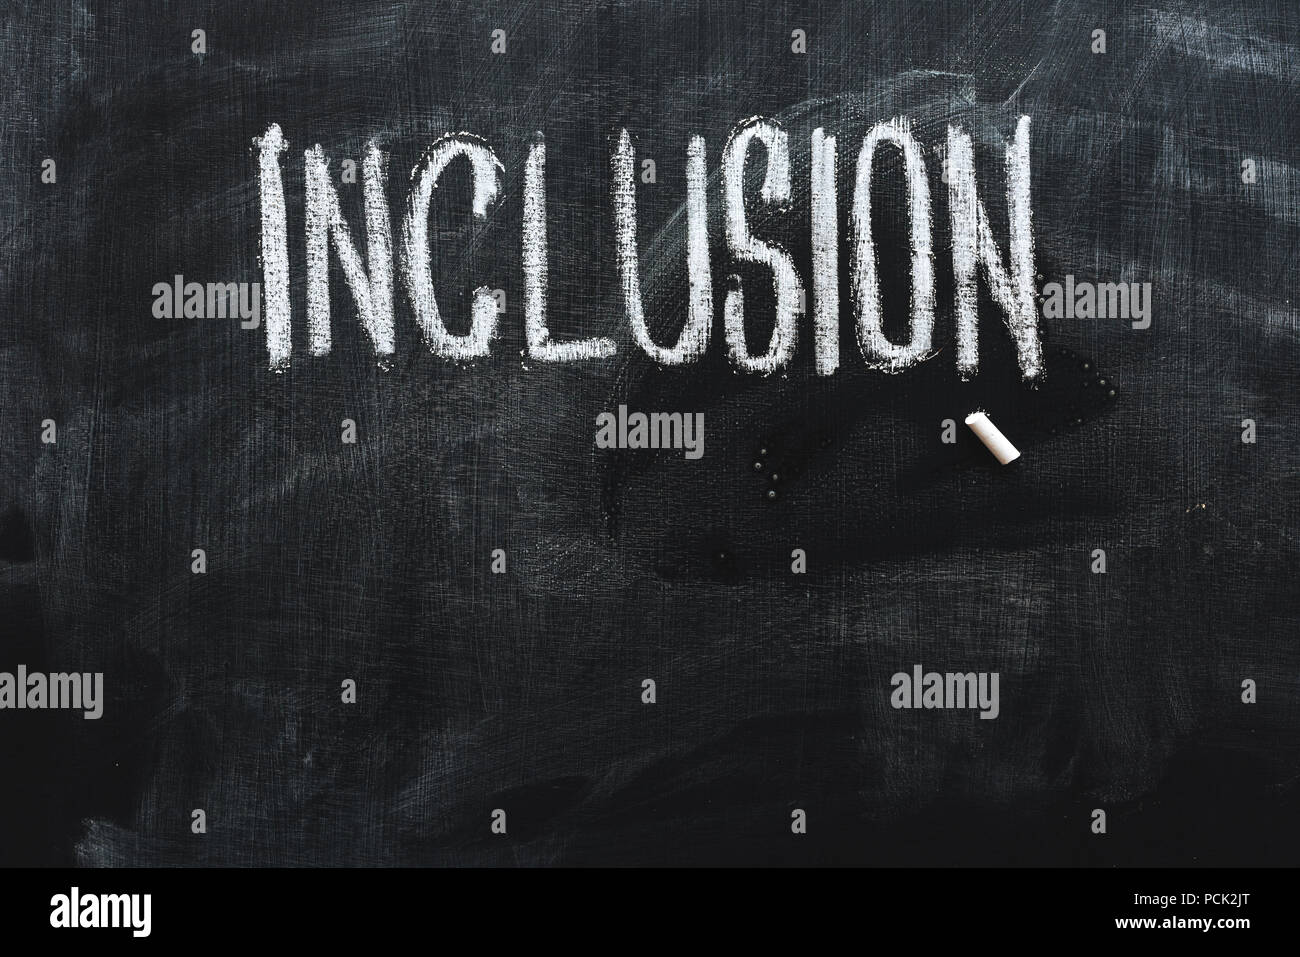 Word Inclusion on school blackboard written with chalk Stock Photo